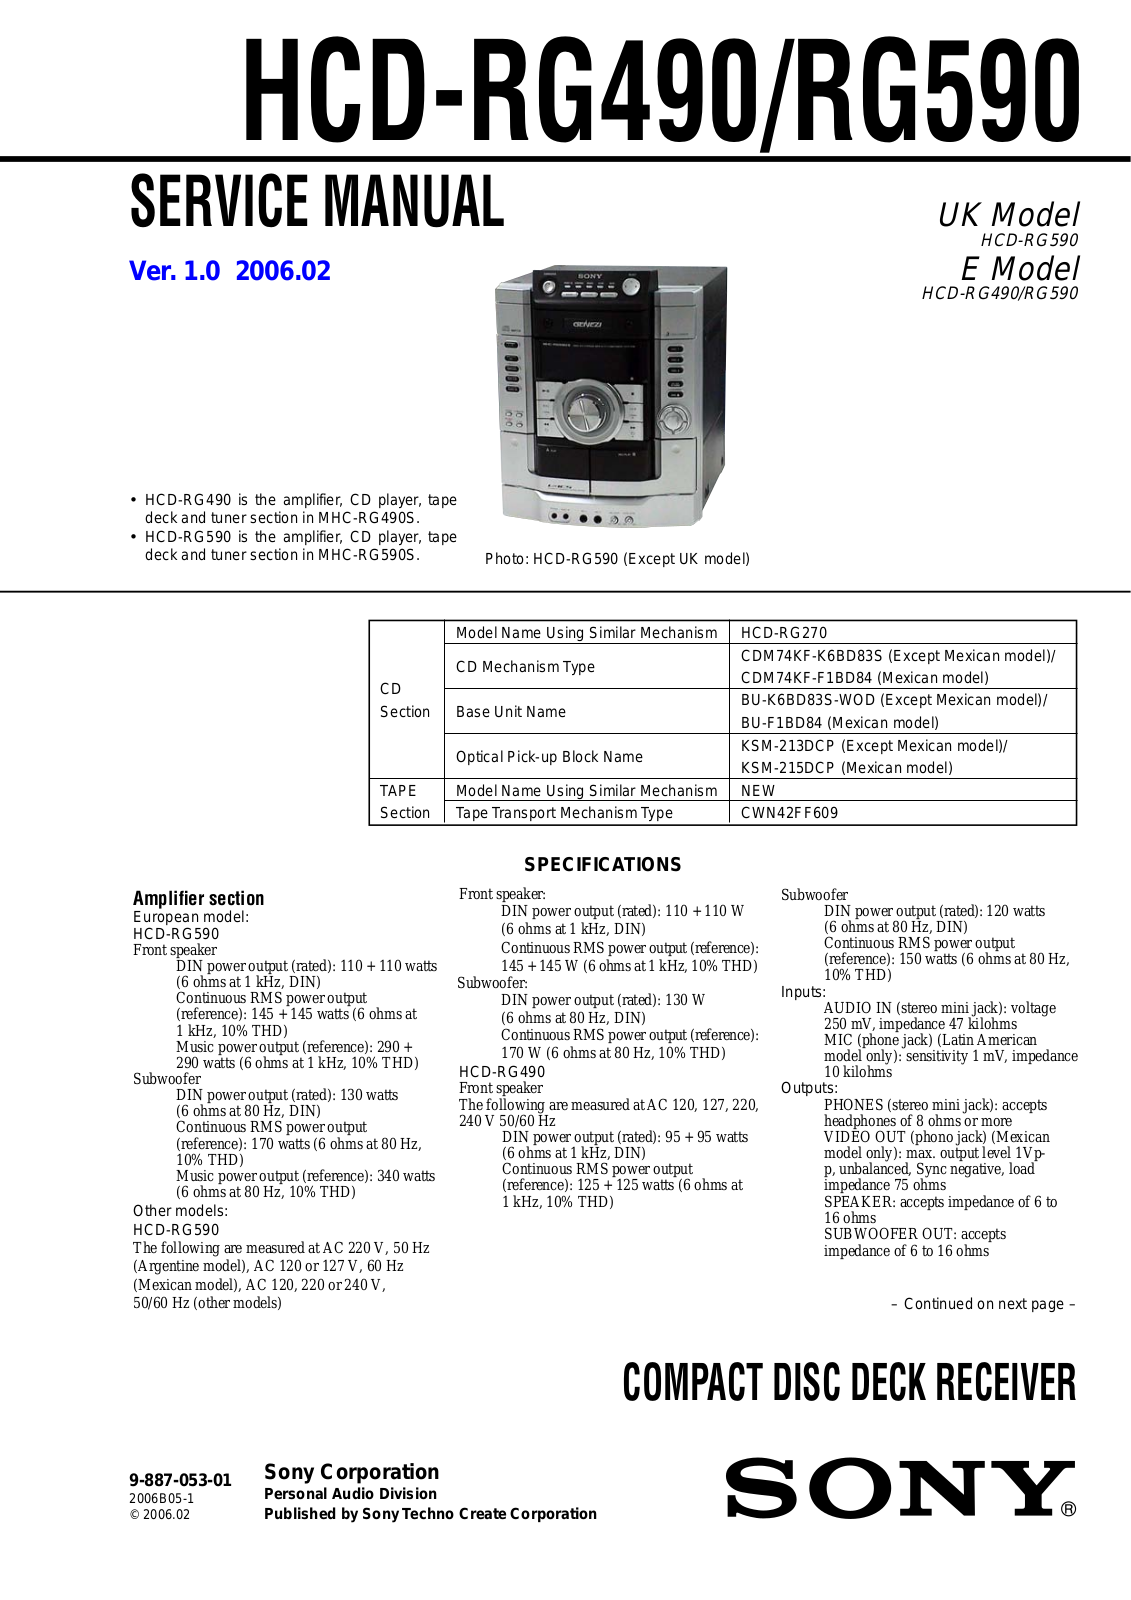 SONY HCD RG490, HCD-RG590 Service Manual